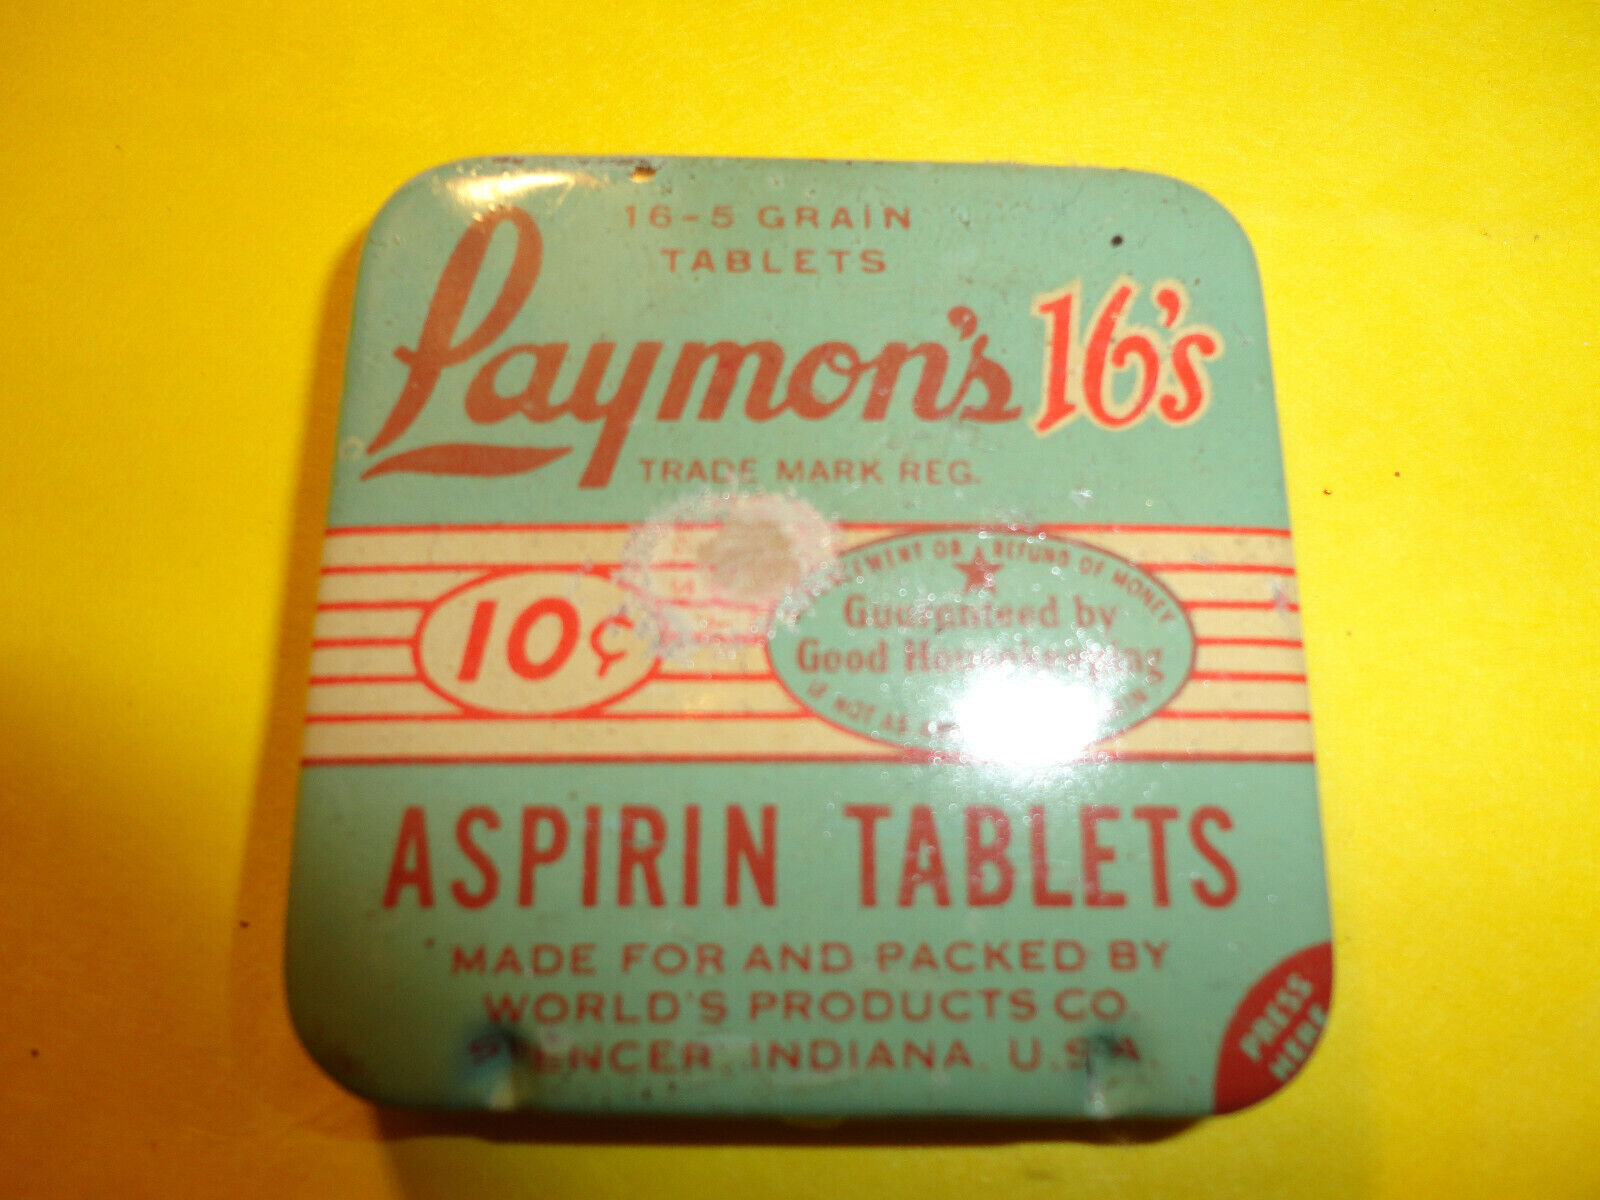 1930-40'S LAYMON'S 16'S ASPIRIN TABLETS TIN-WORLD PRODUCTS-SPENCER IND-HEADACHES